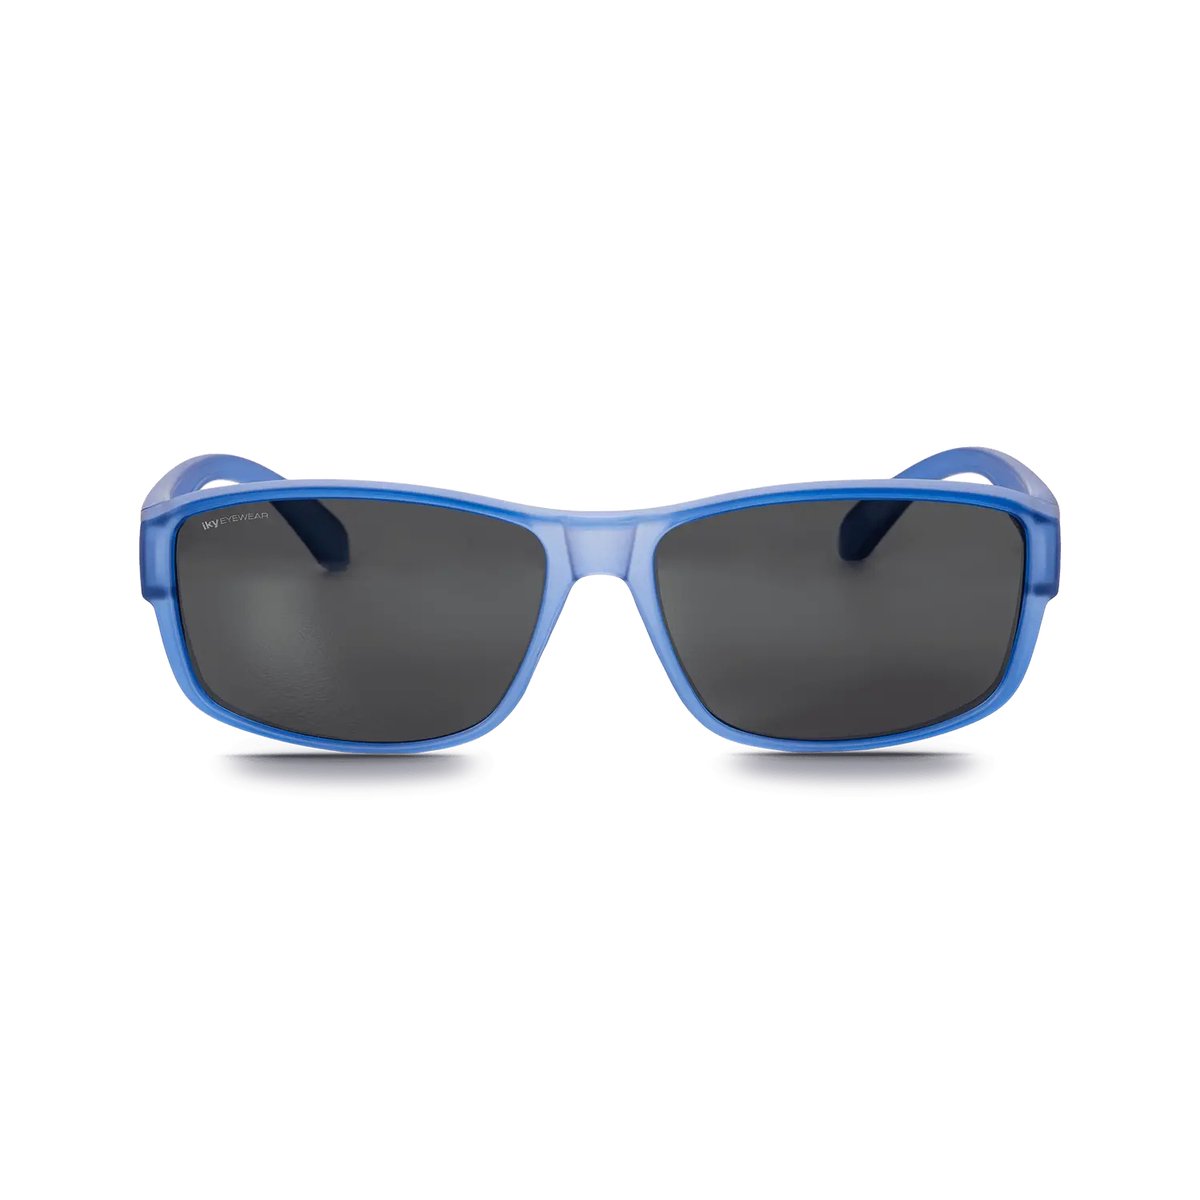 IKY EYEWEAR overzet zonnebril OB-1004C2-blauw-semi-transparant